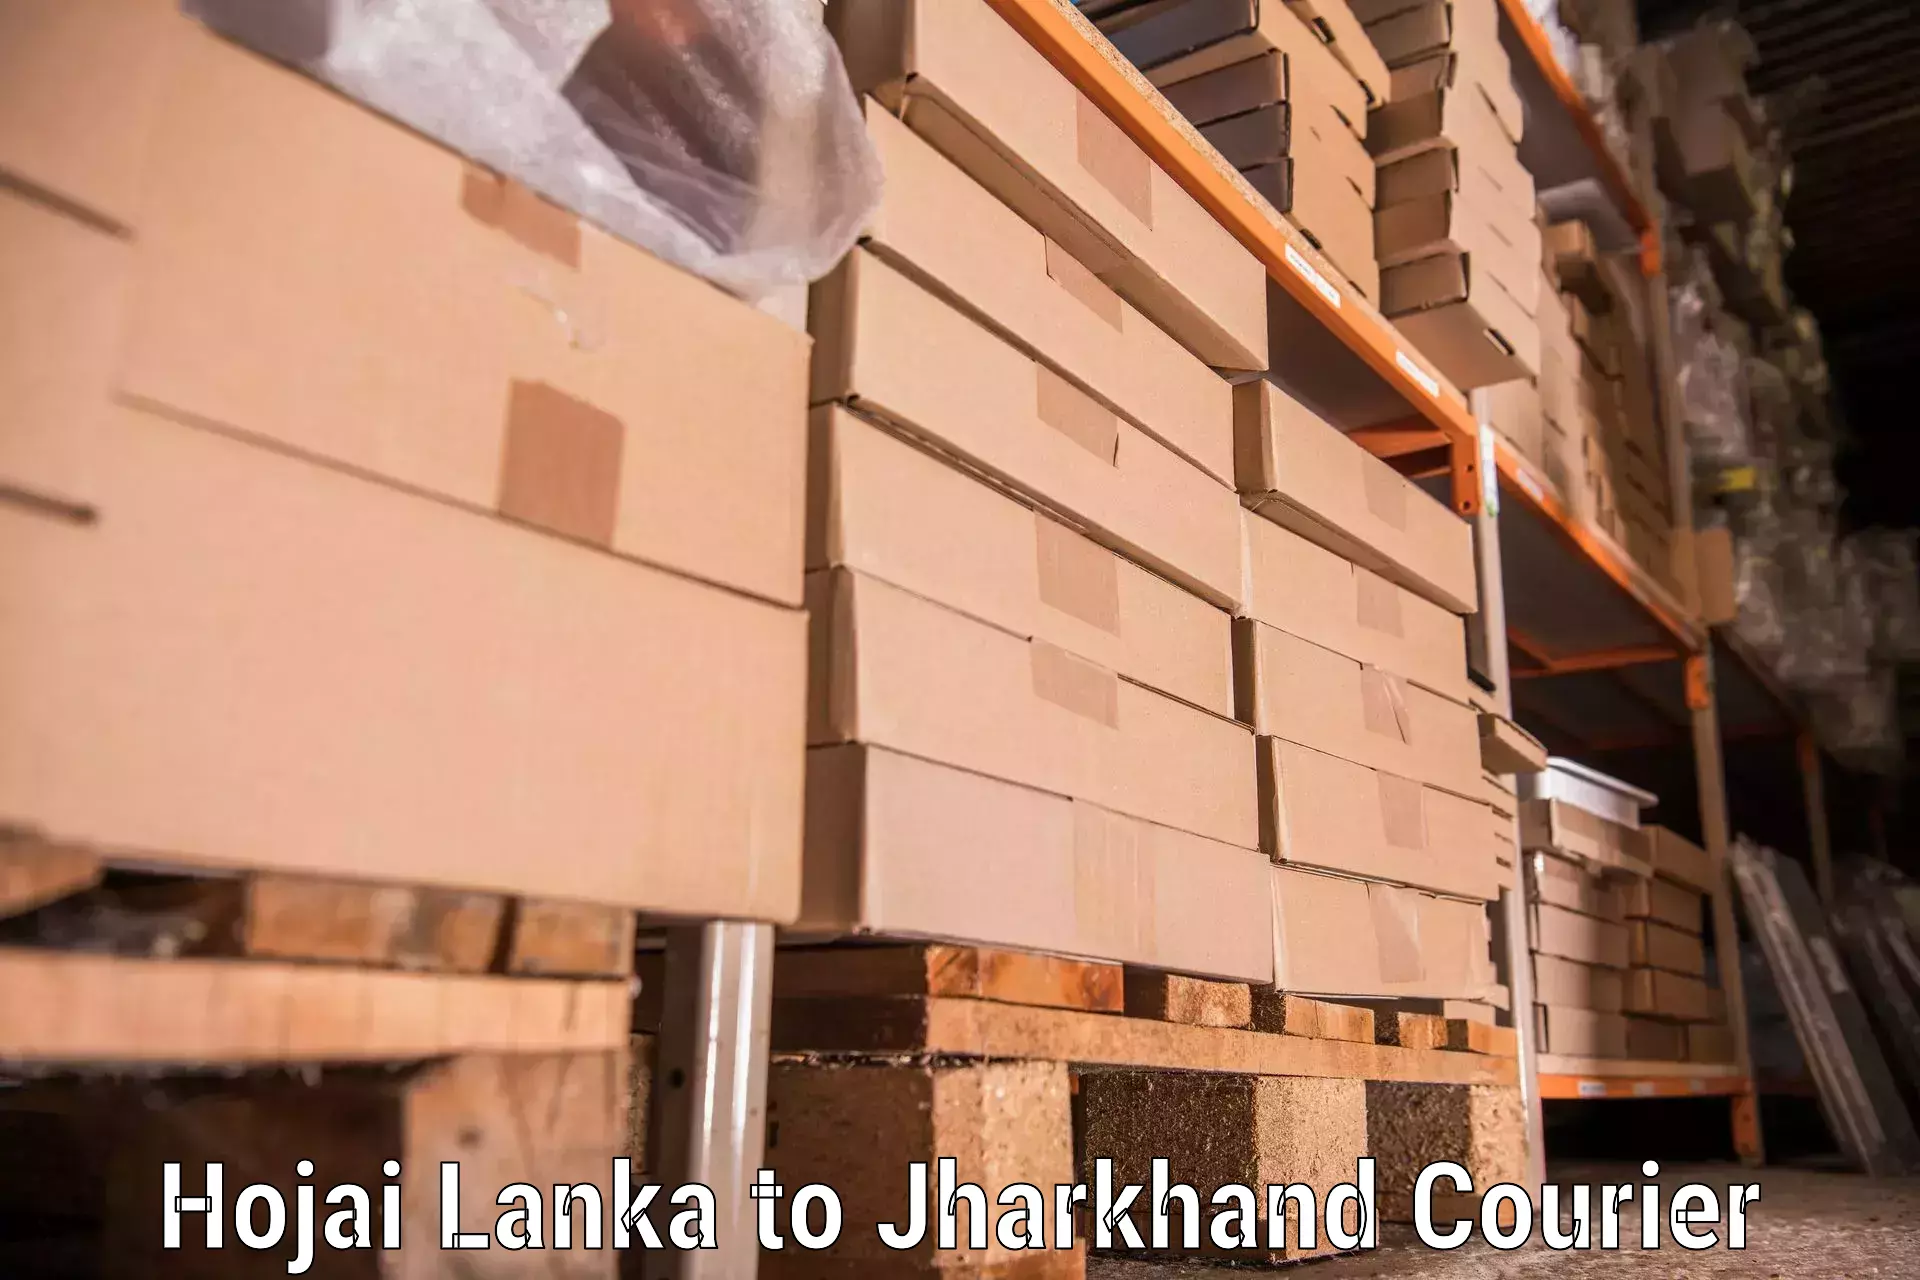 Quality relocation assistance Hojai Lanka to Itkhori